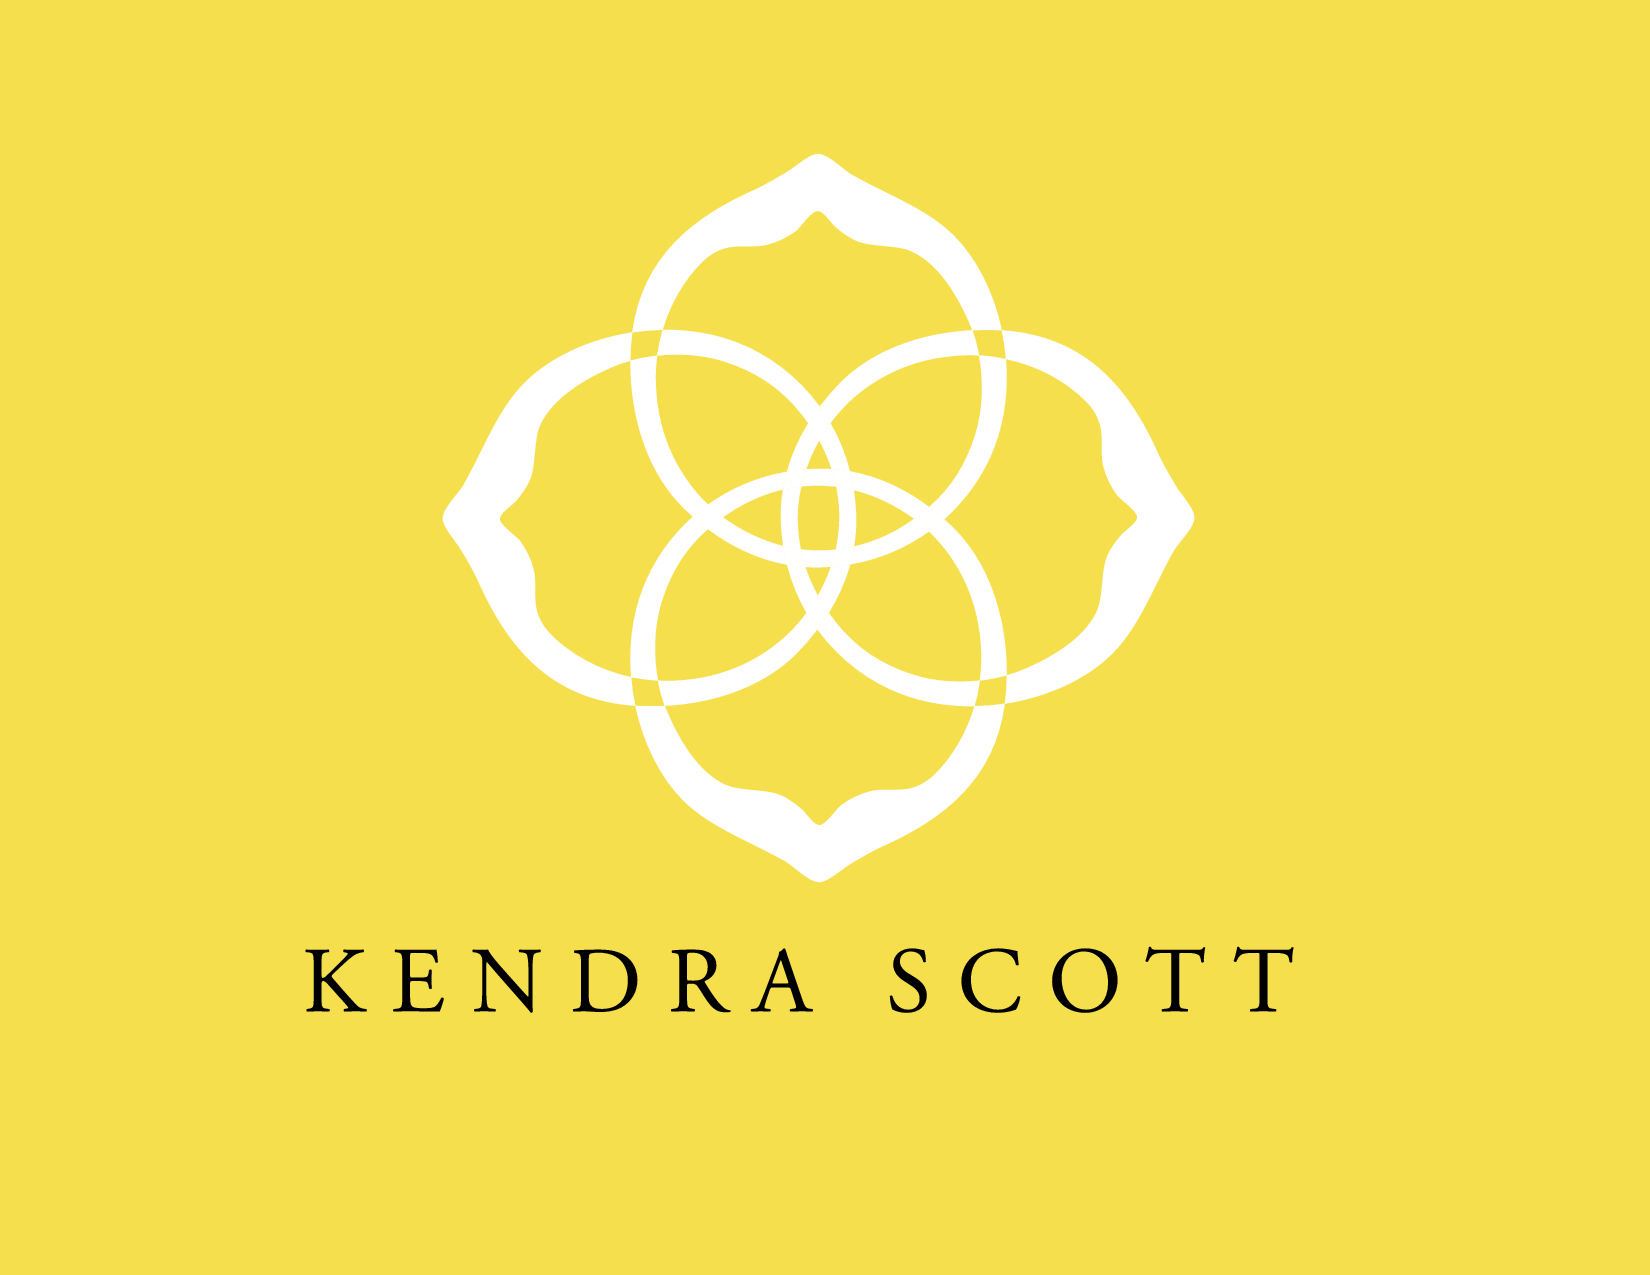 Scott Logo - kendra-scott-logo - Smart Start of Mecklenburg